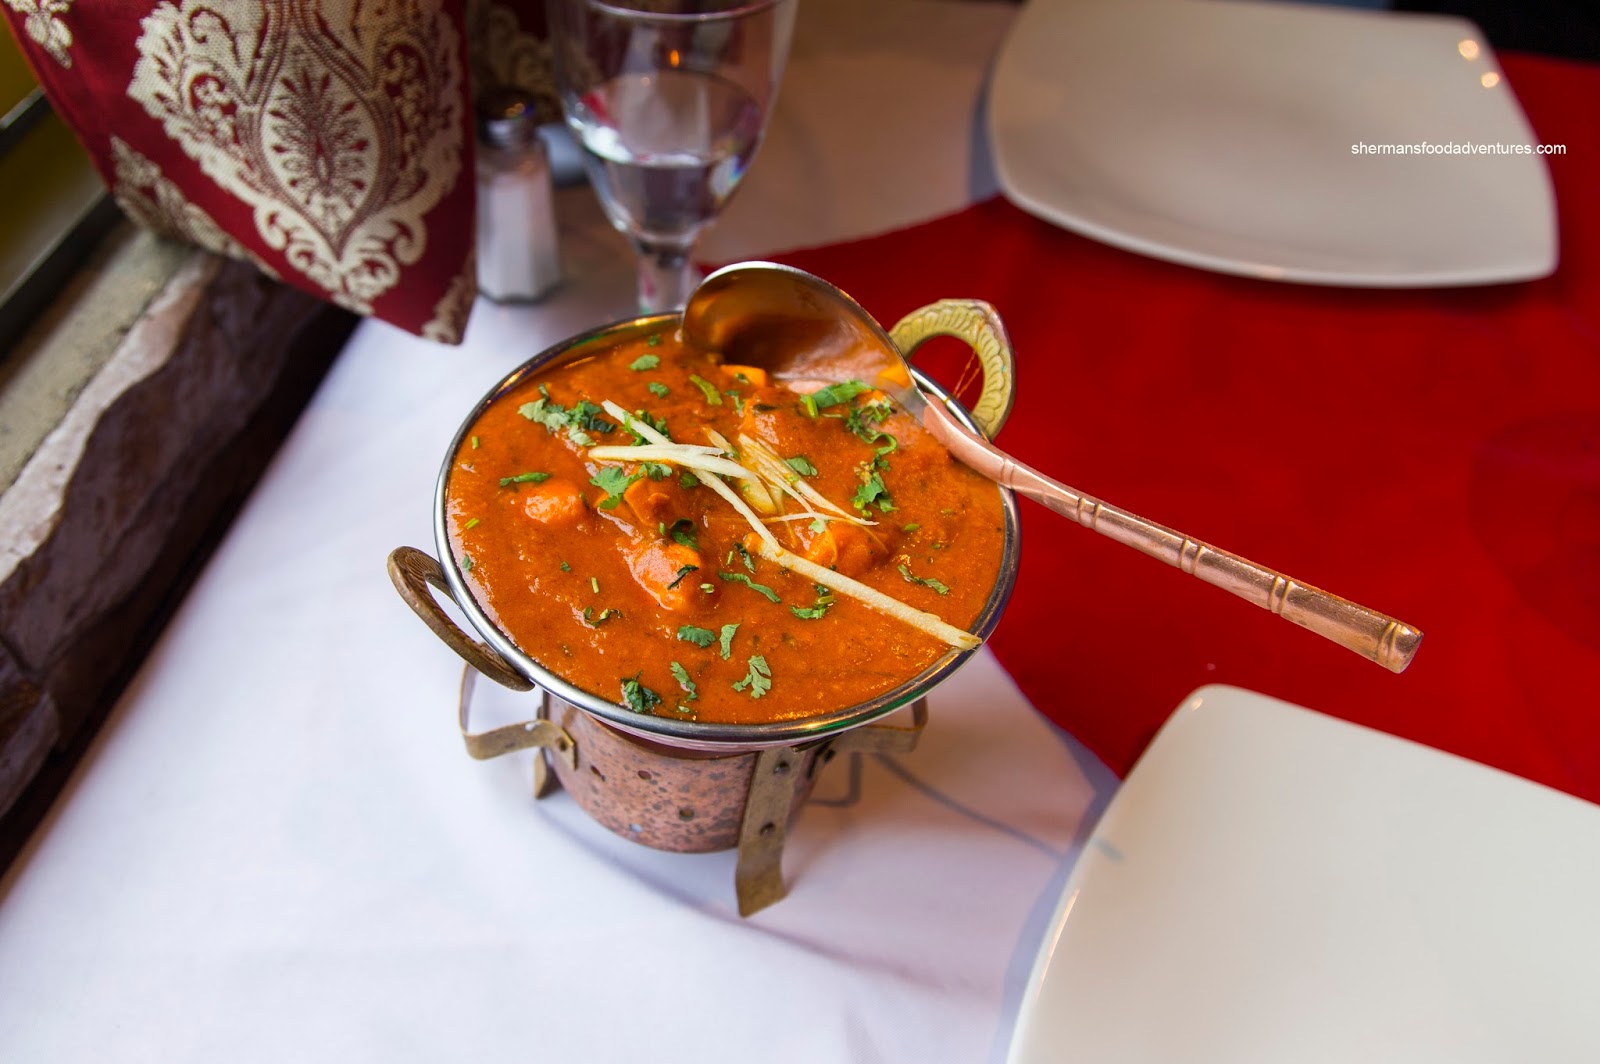 Sherman's Food Adventures: Jaipur Indian Restaurant